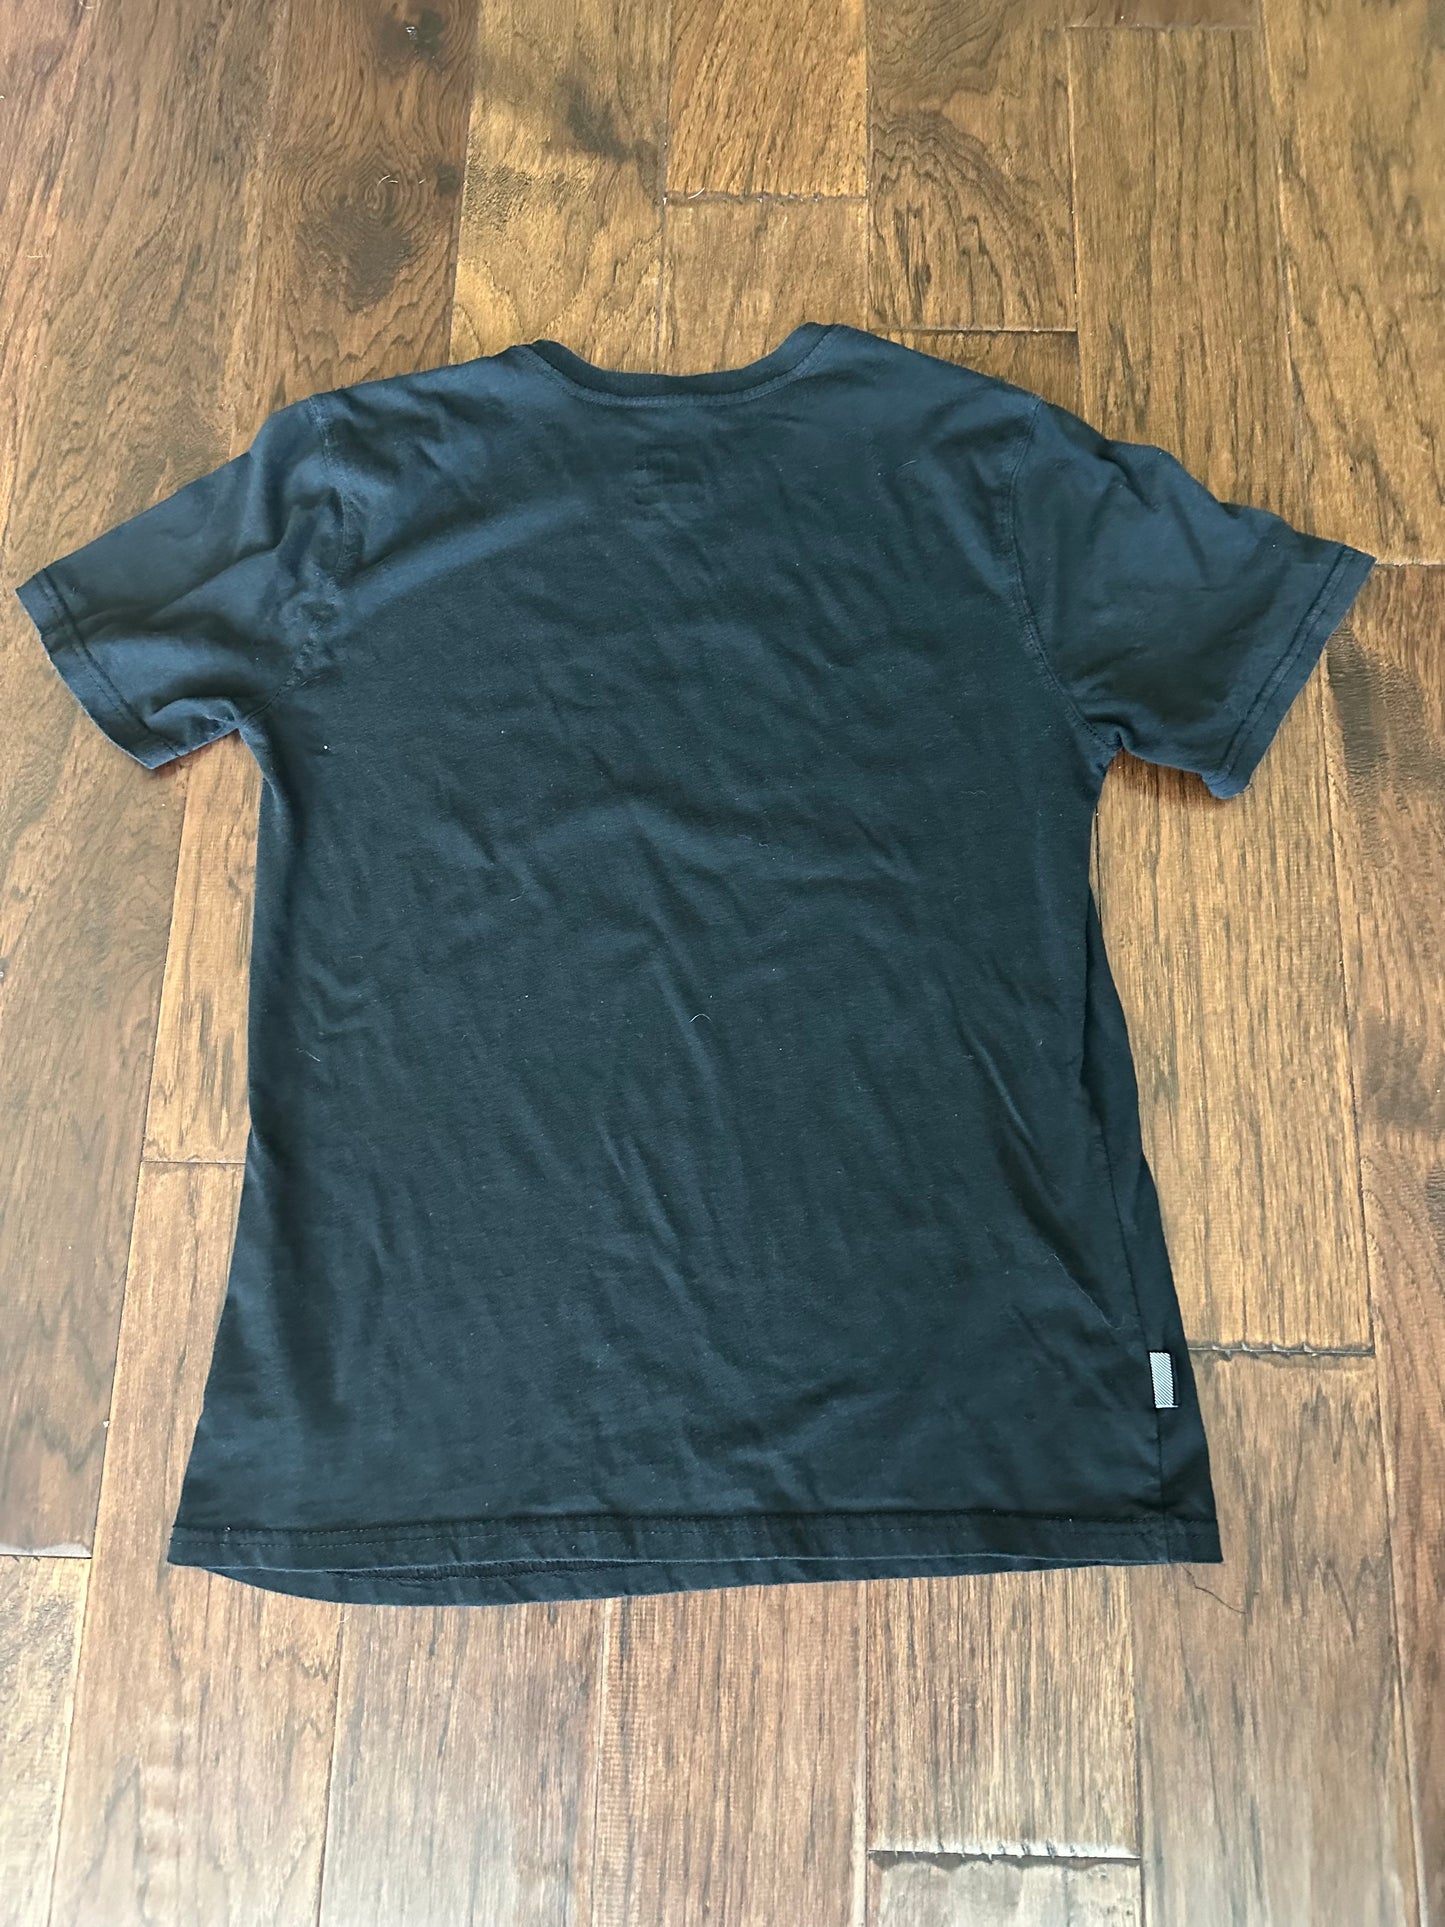 NBA - Black Medium shirt